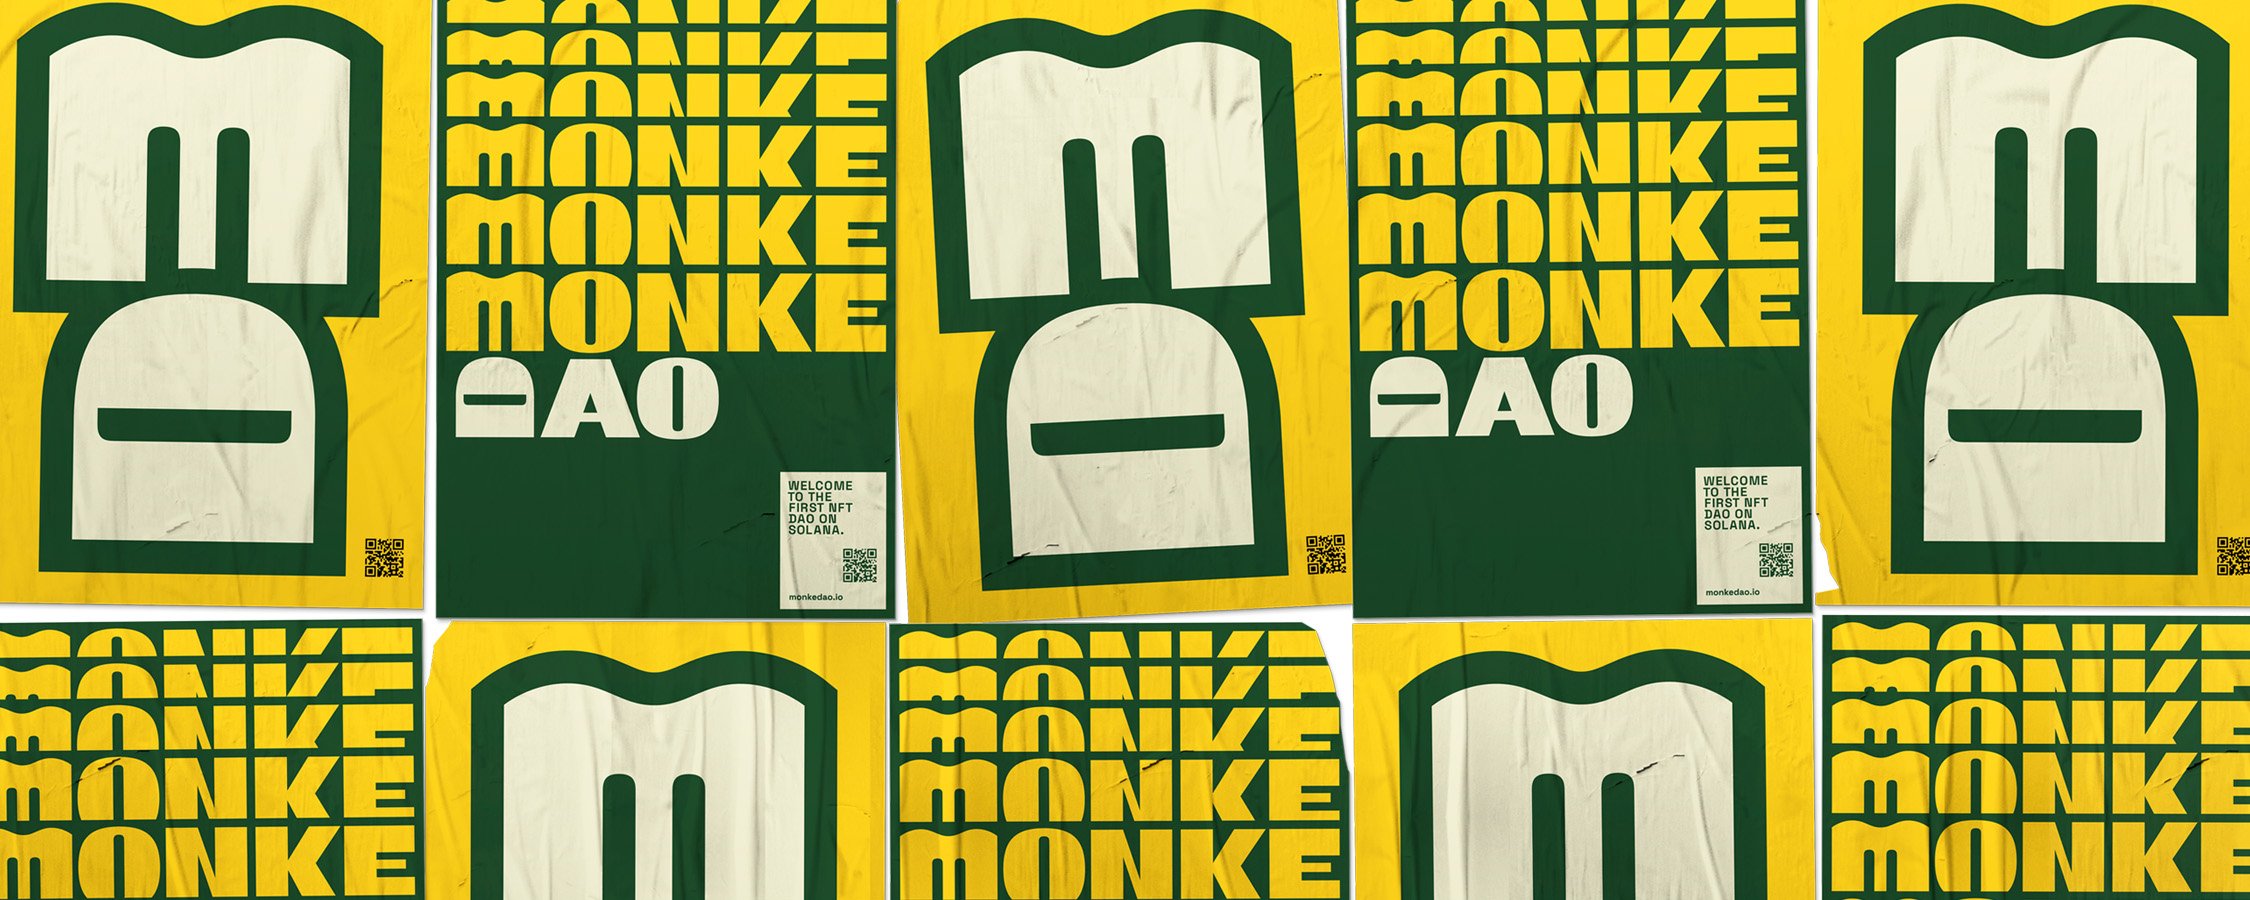 MonkeDAO-Posters.jpg